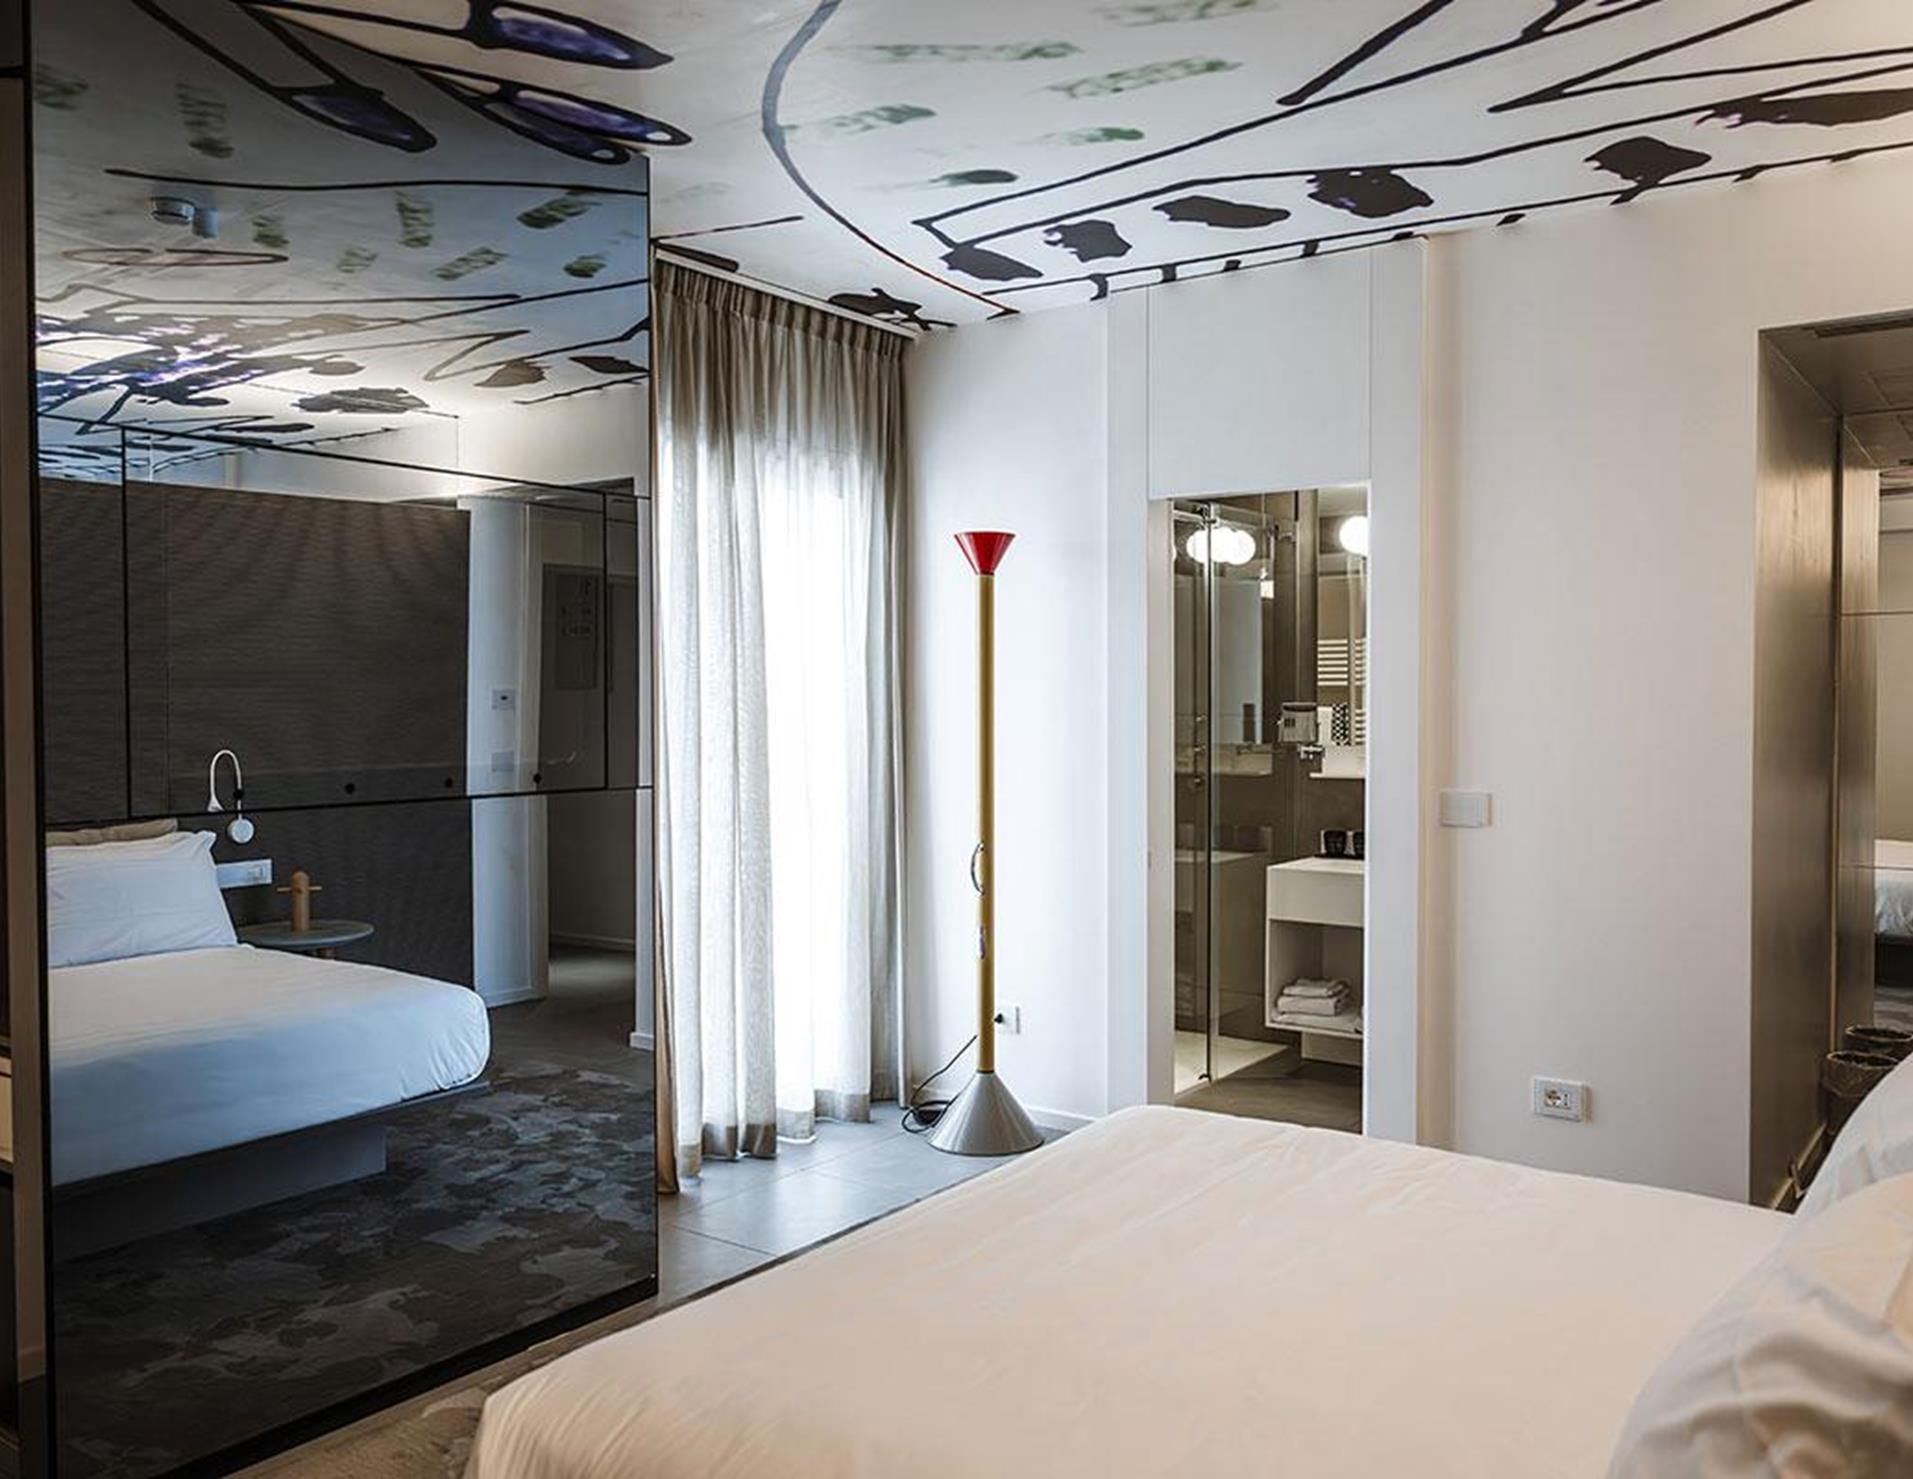 Biancodonda Lifestyle Hotel & Spa - Room 8